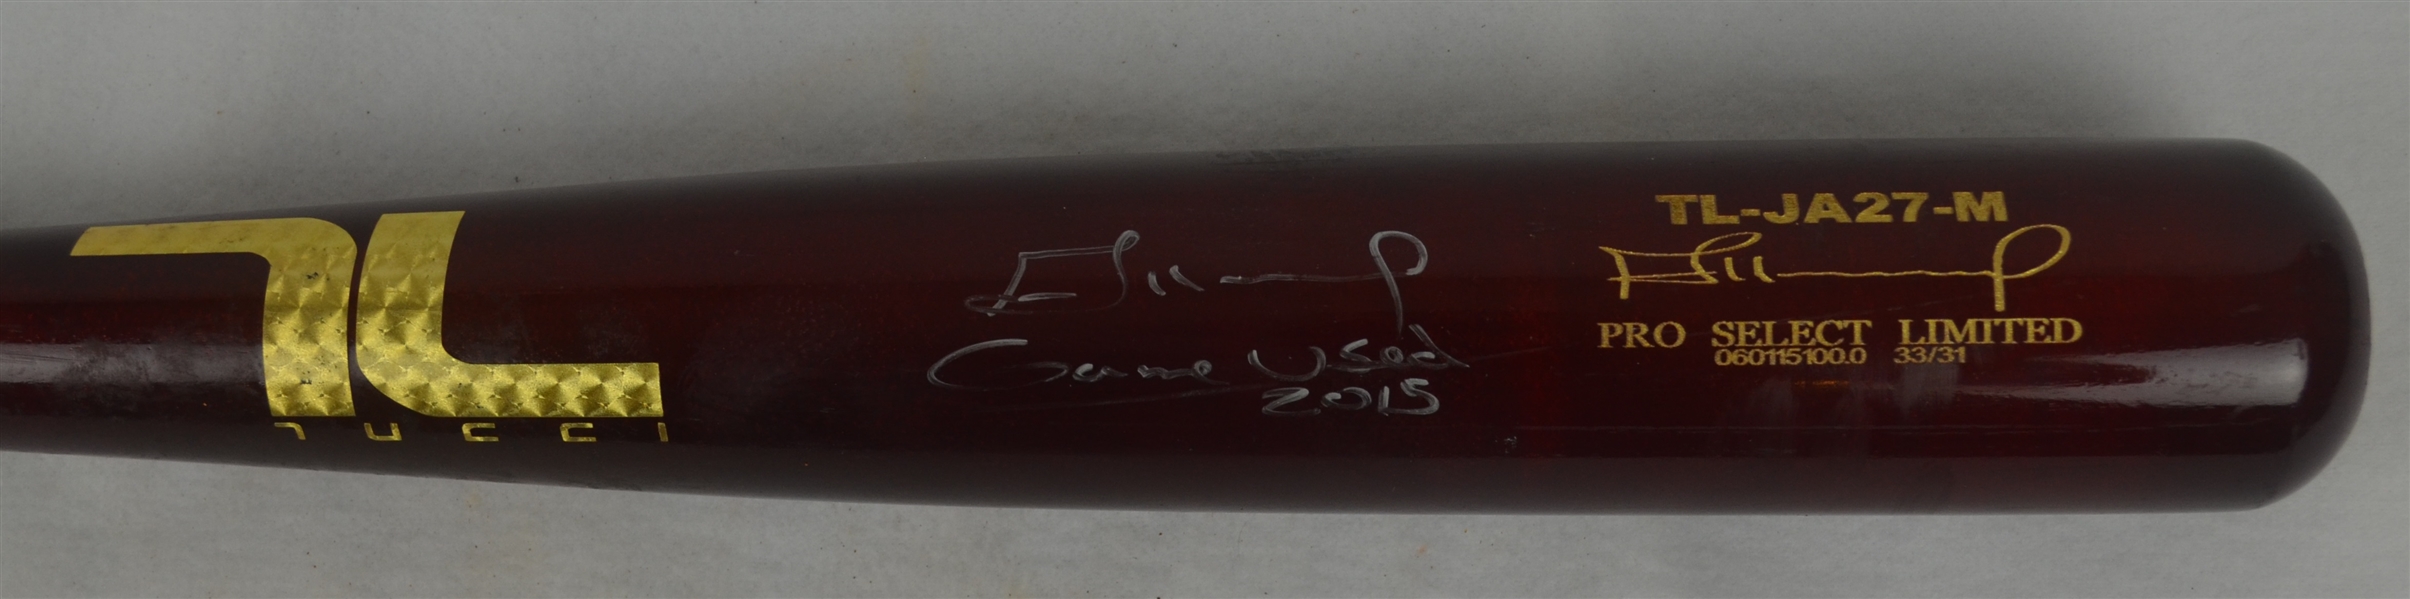 Jose Altuve 2015 Houston Astros Professional Model Signed & Inscribed Bat w/Light Use